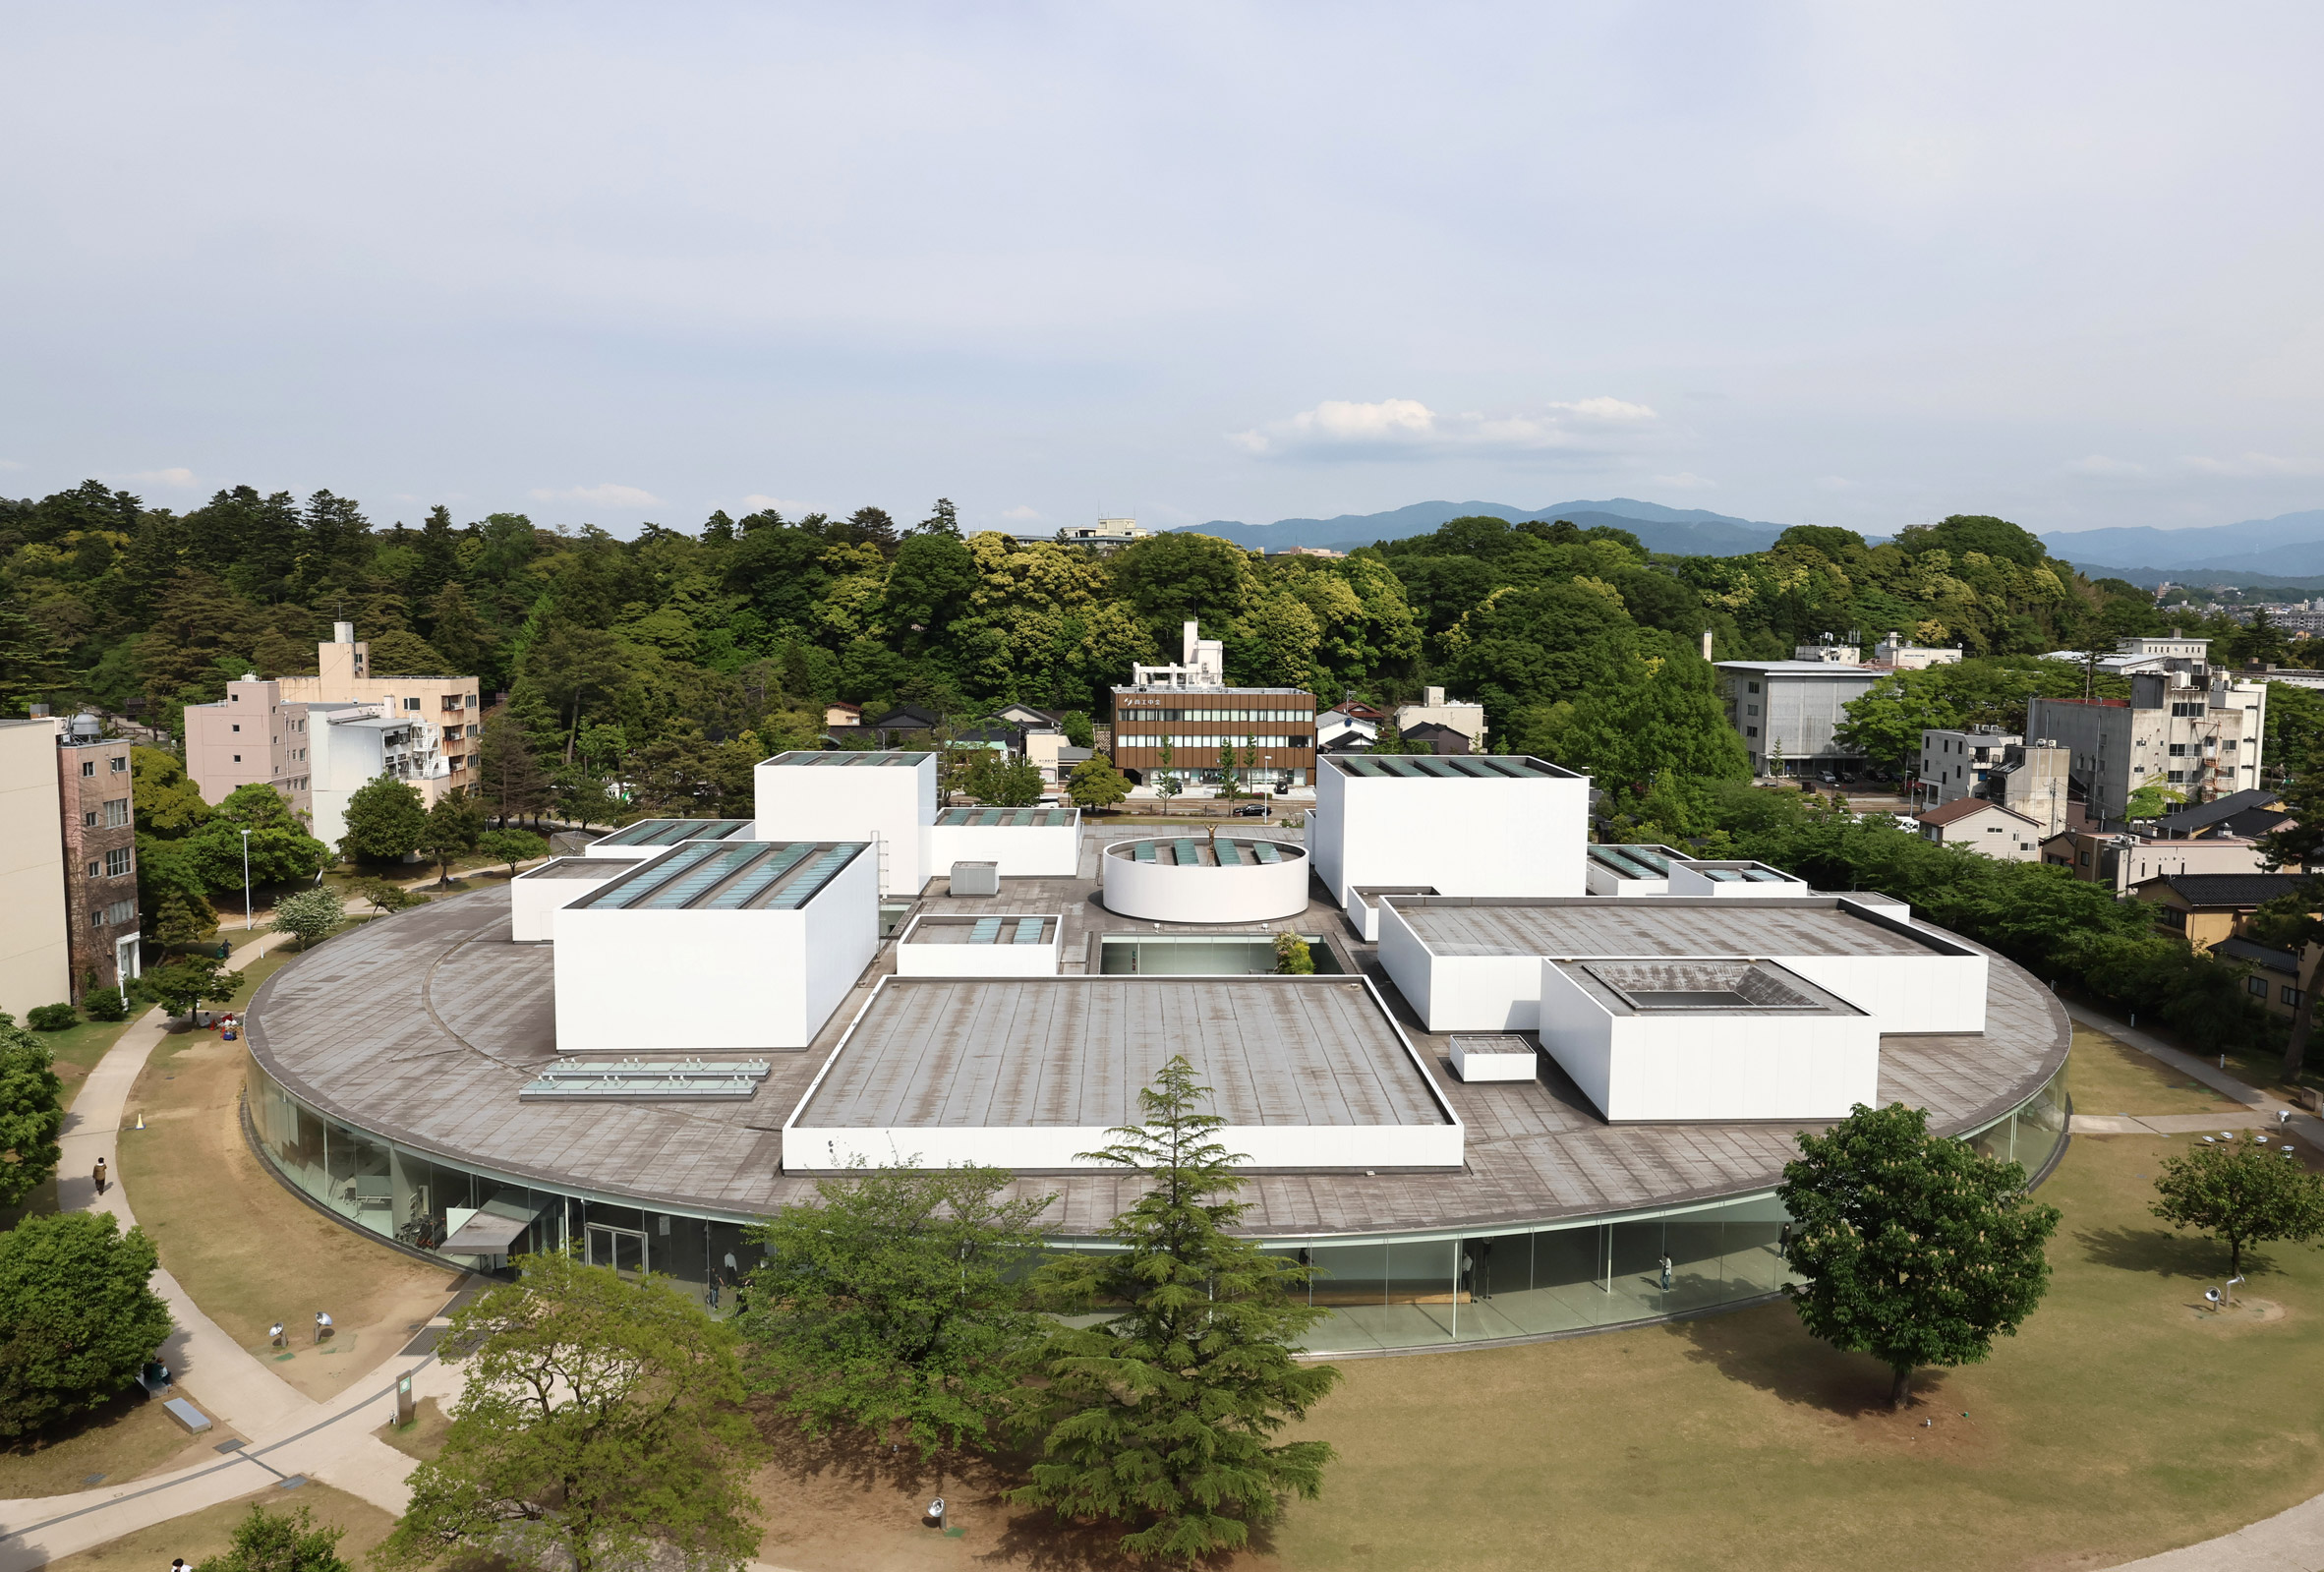 Aerial view of SANAA's 21st Century Museum of Contemporary Art in Kanazawa